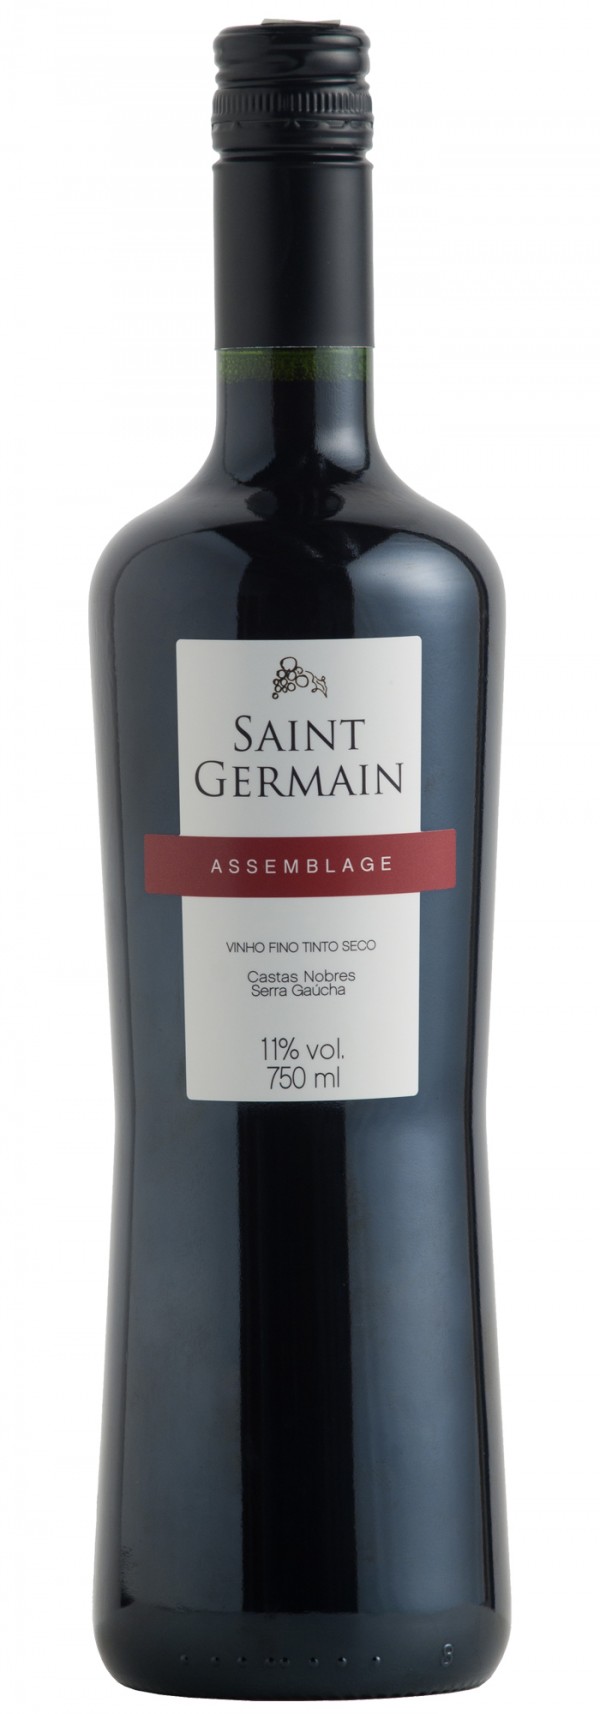 Vinho Saint Germain assemblage tinto seco 750 ml